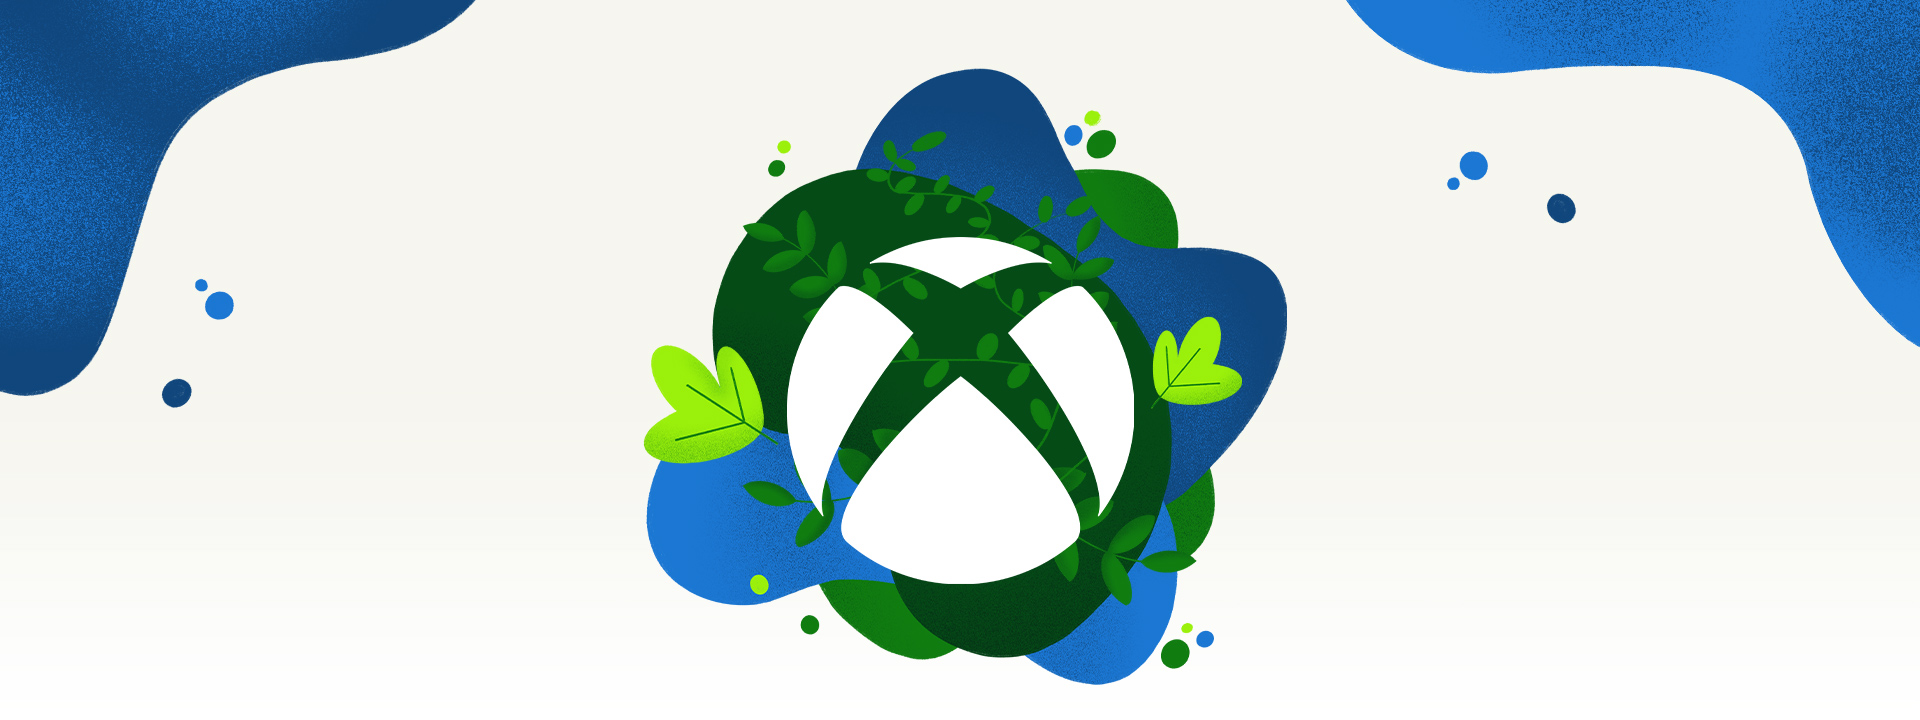 Un logotipo de Xbox está rodeado de vegetación y salpicaduras de agua azul.